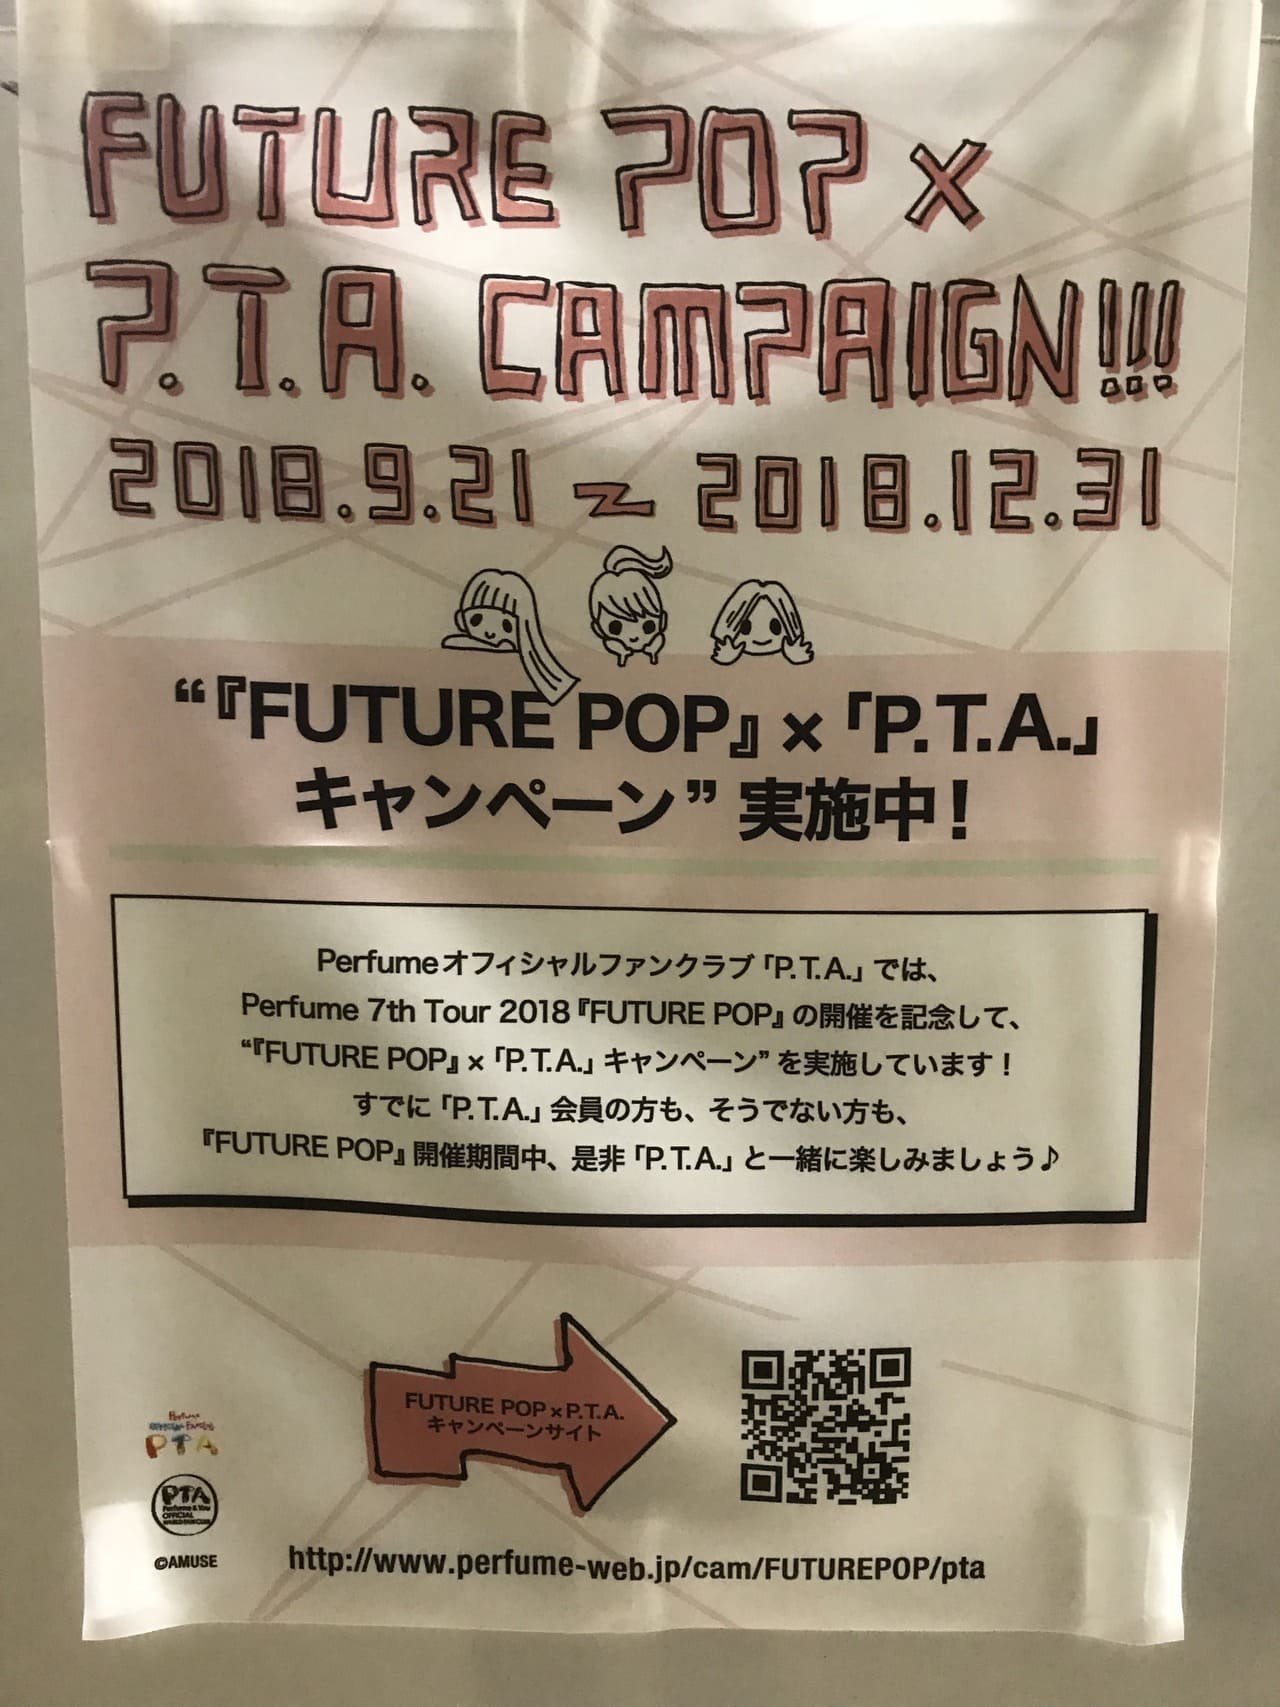 Perfume 7th Tour 2018 FUTURE POP